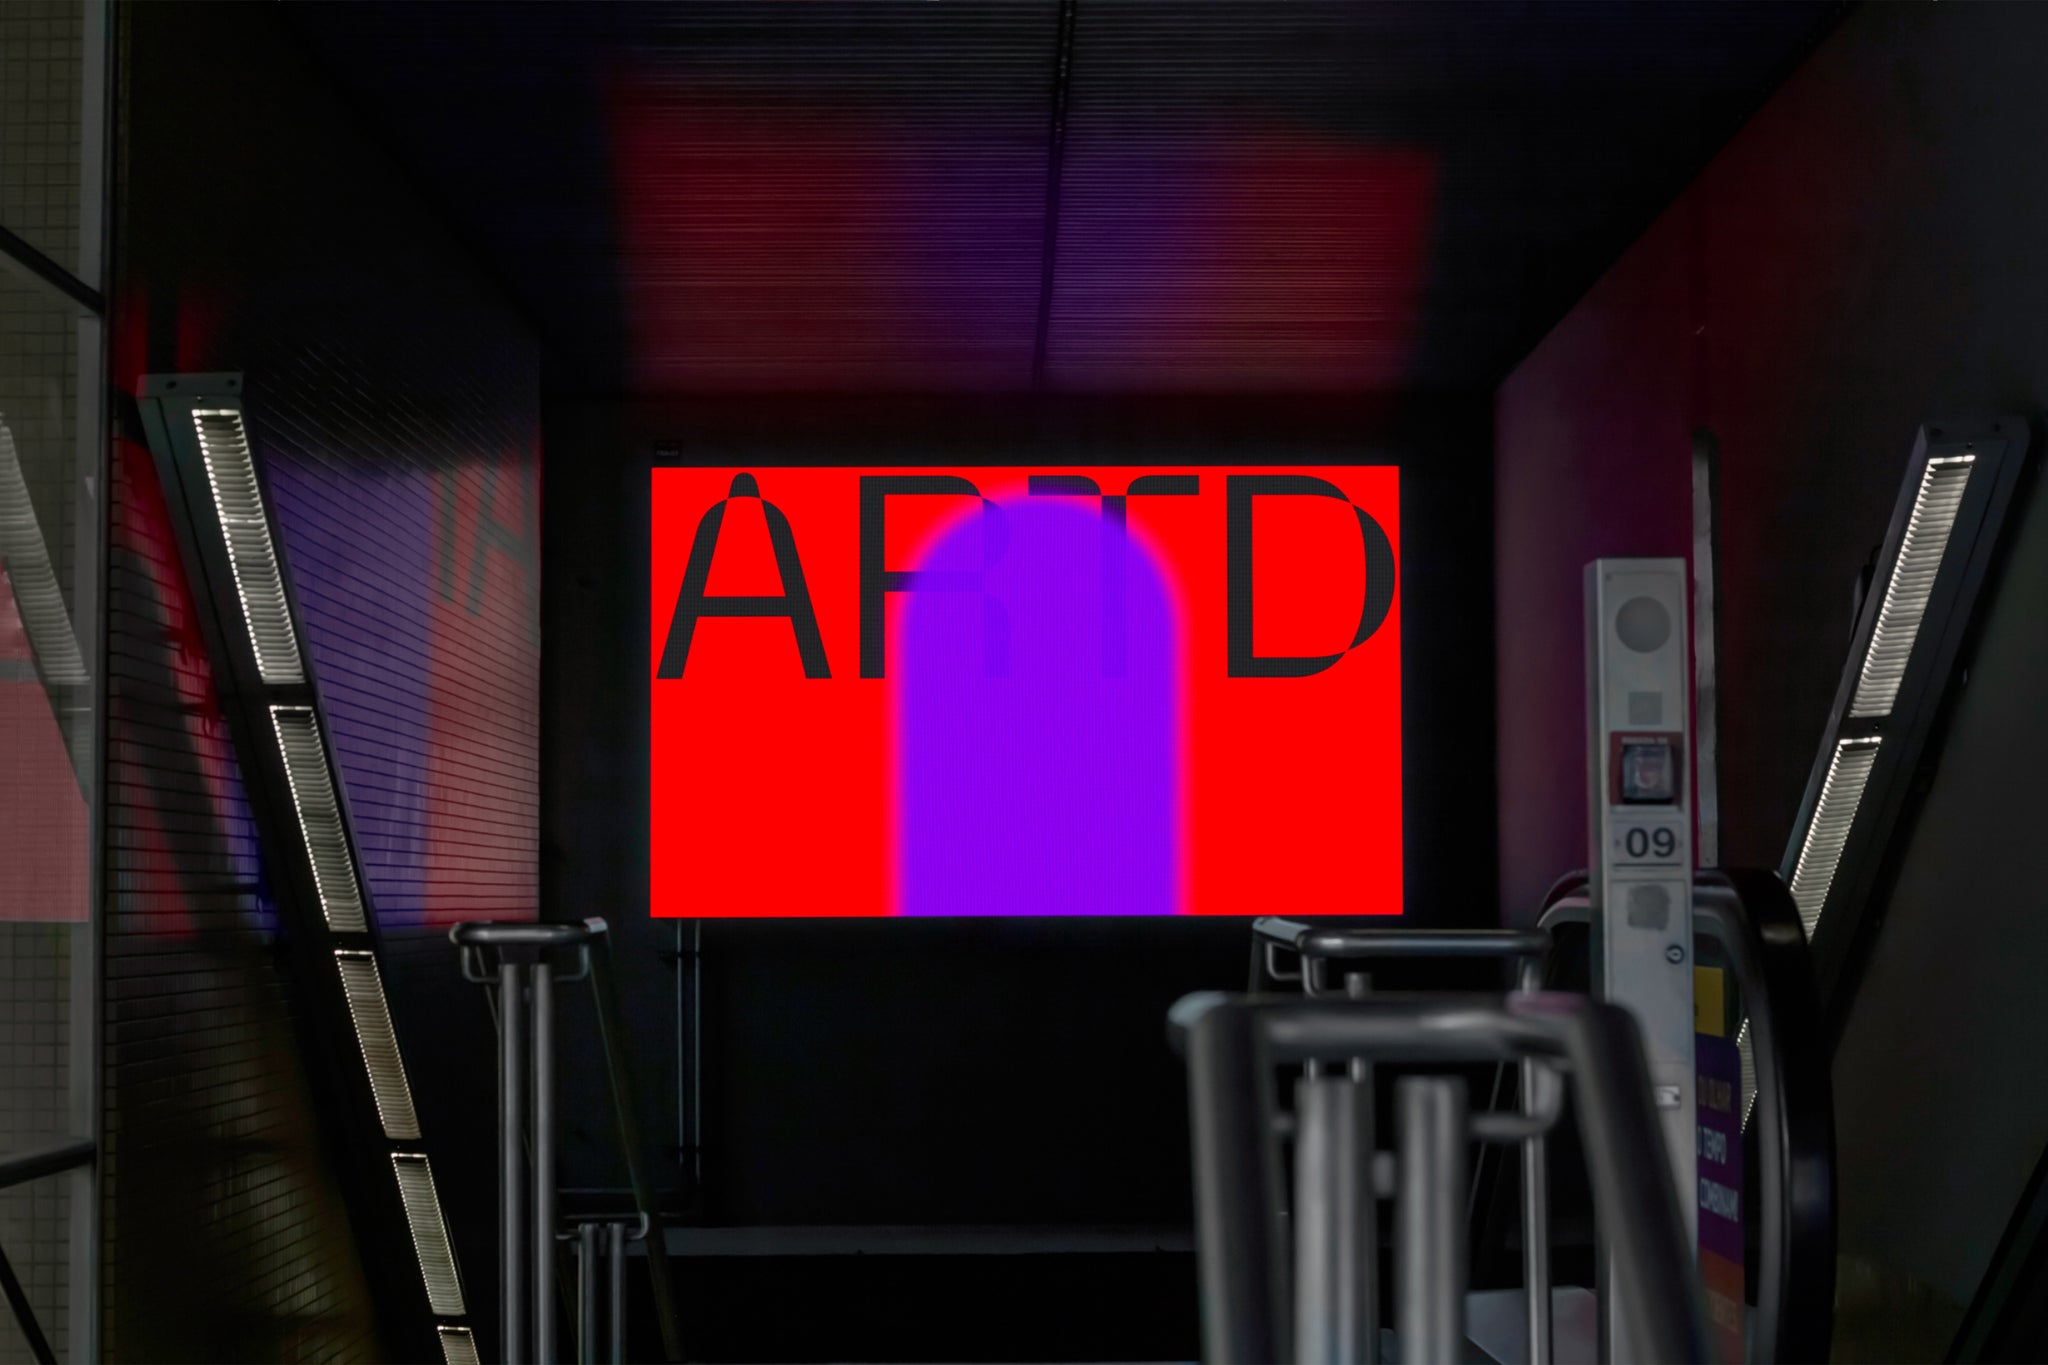 ARTD-C02-Screen-001 (Special)